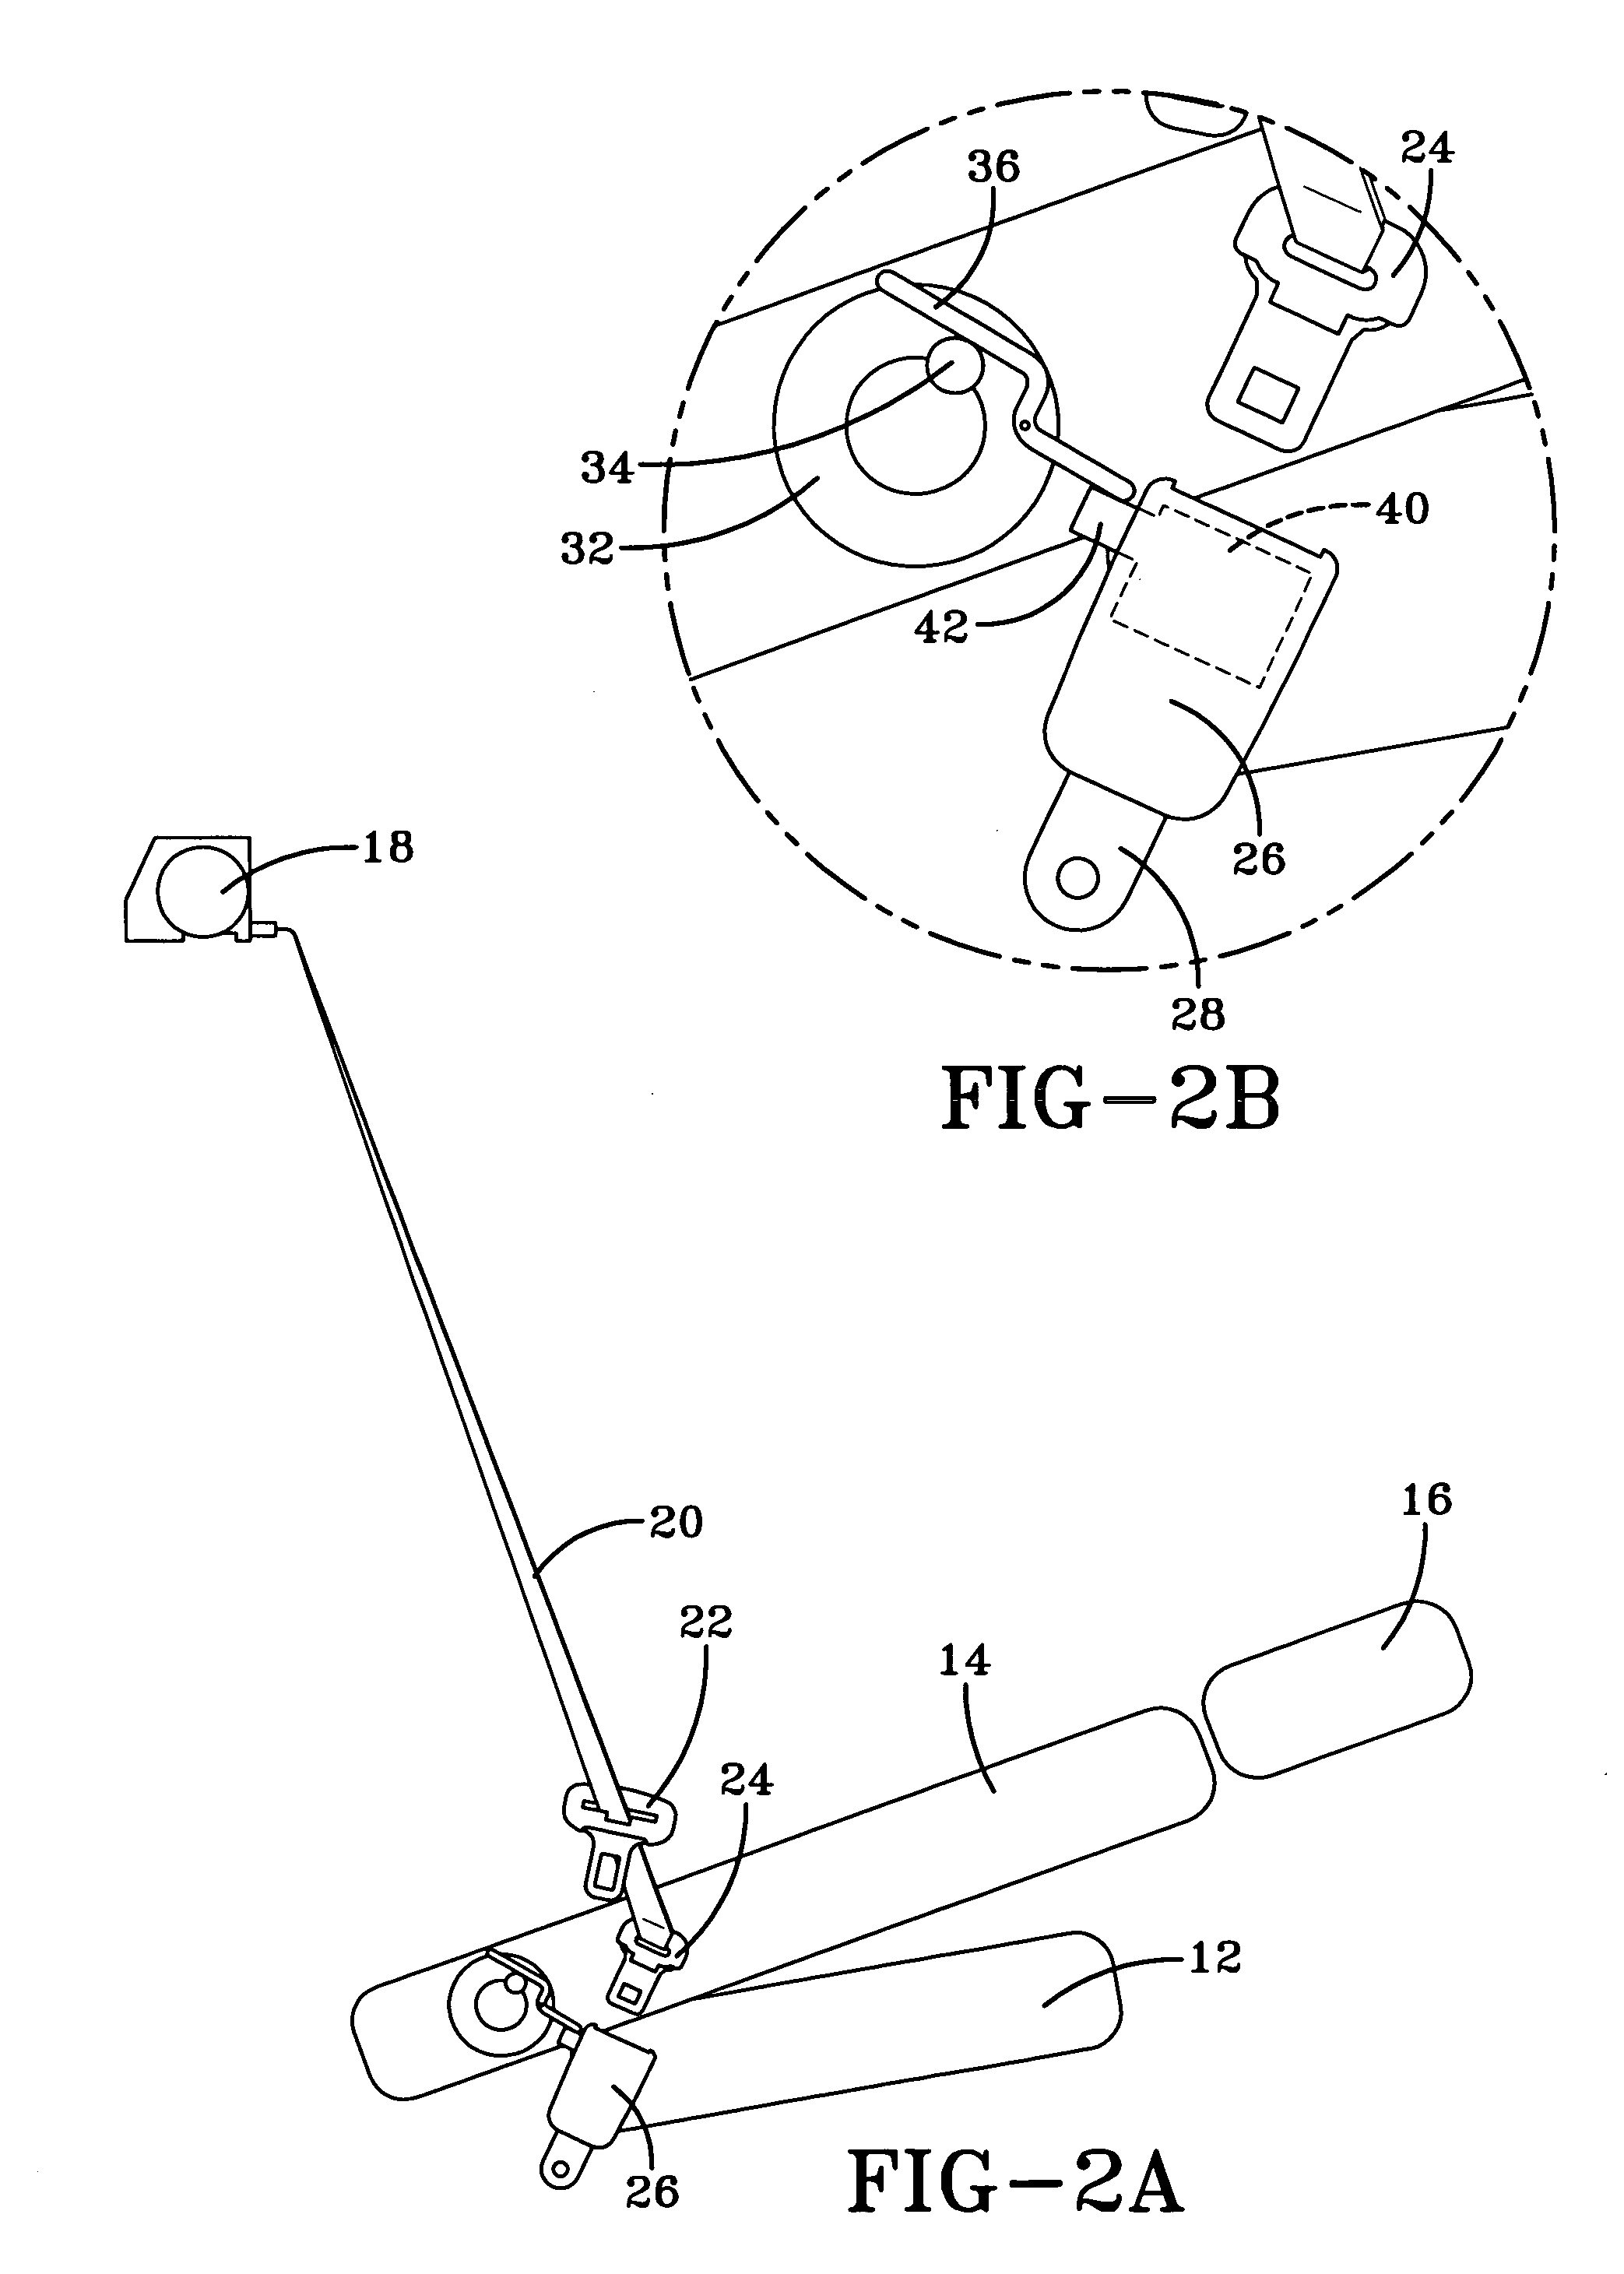 Automatic seat belt buckle tongue releasing mechanism